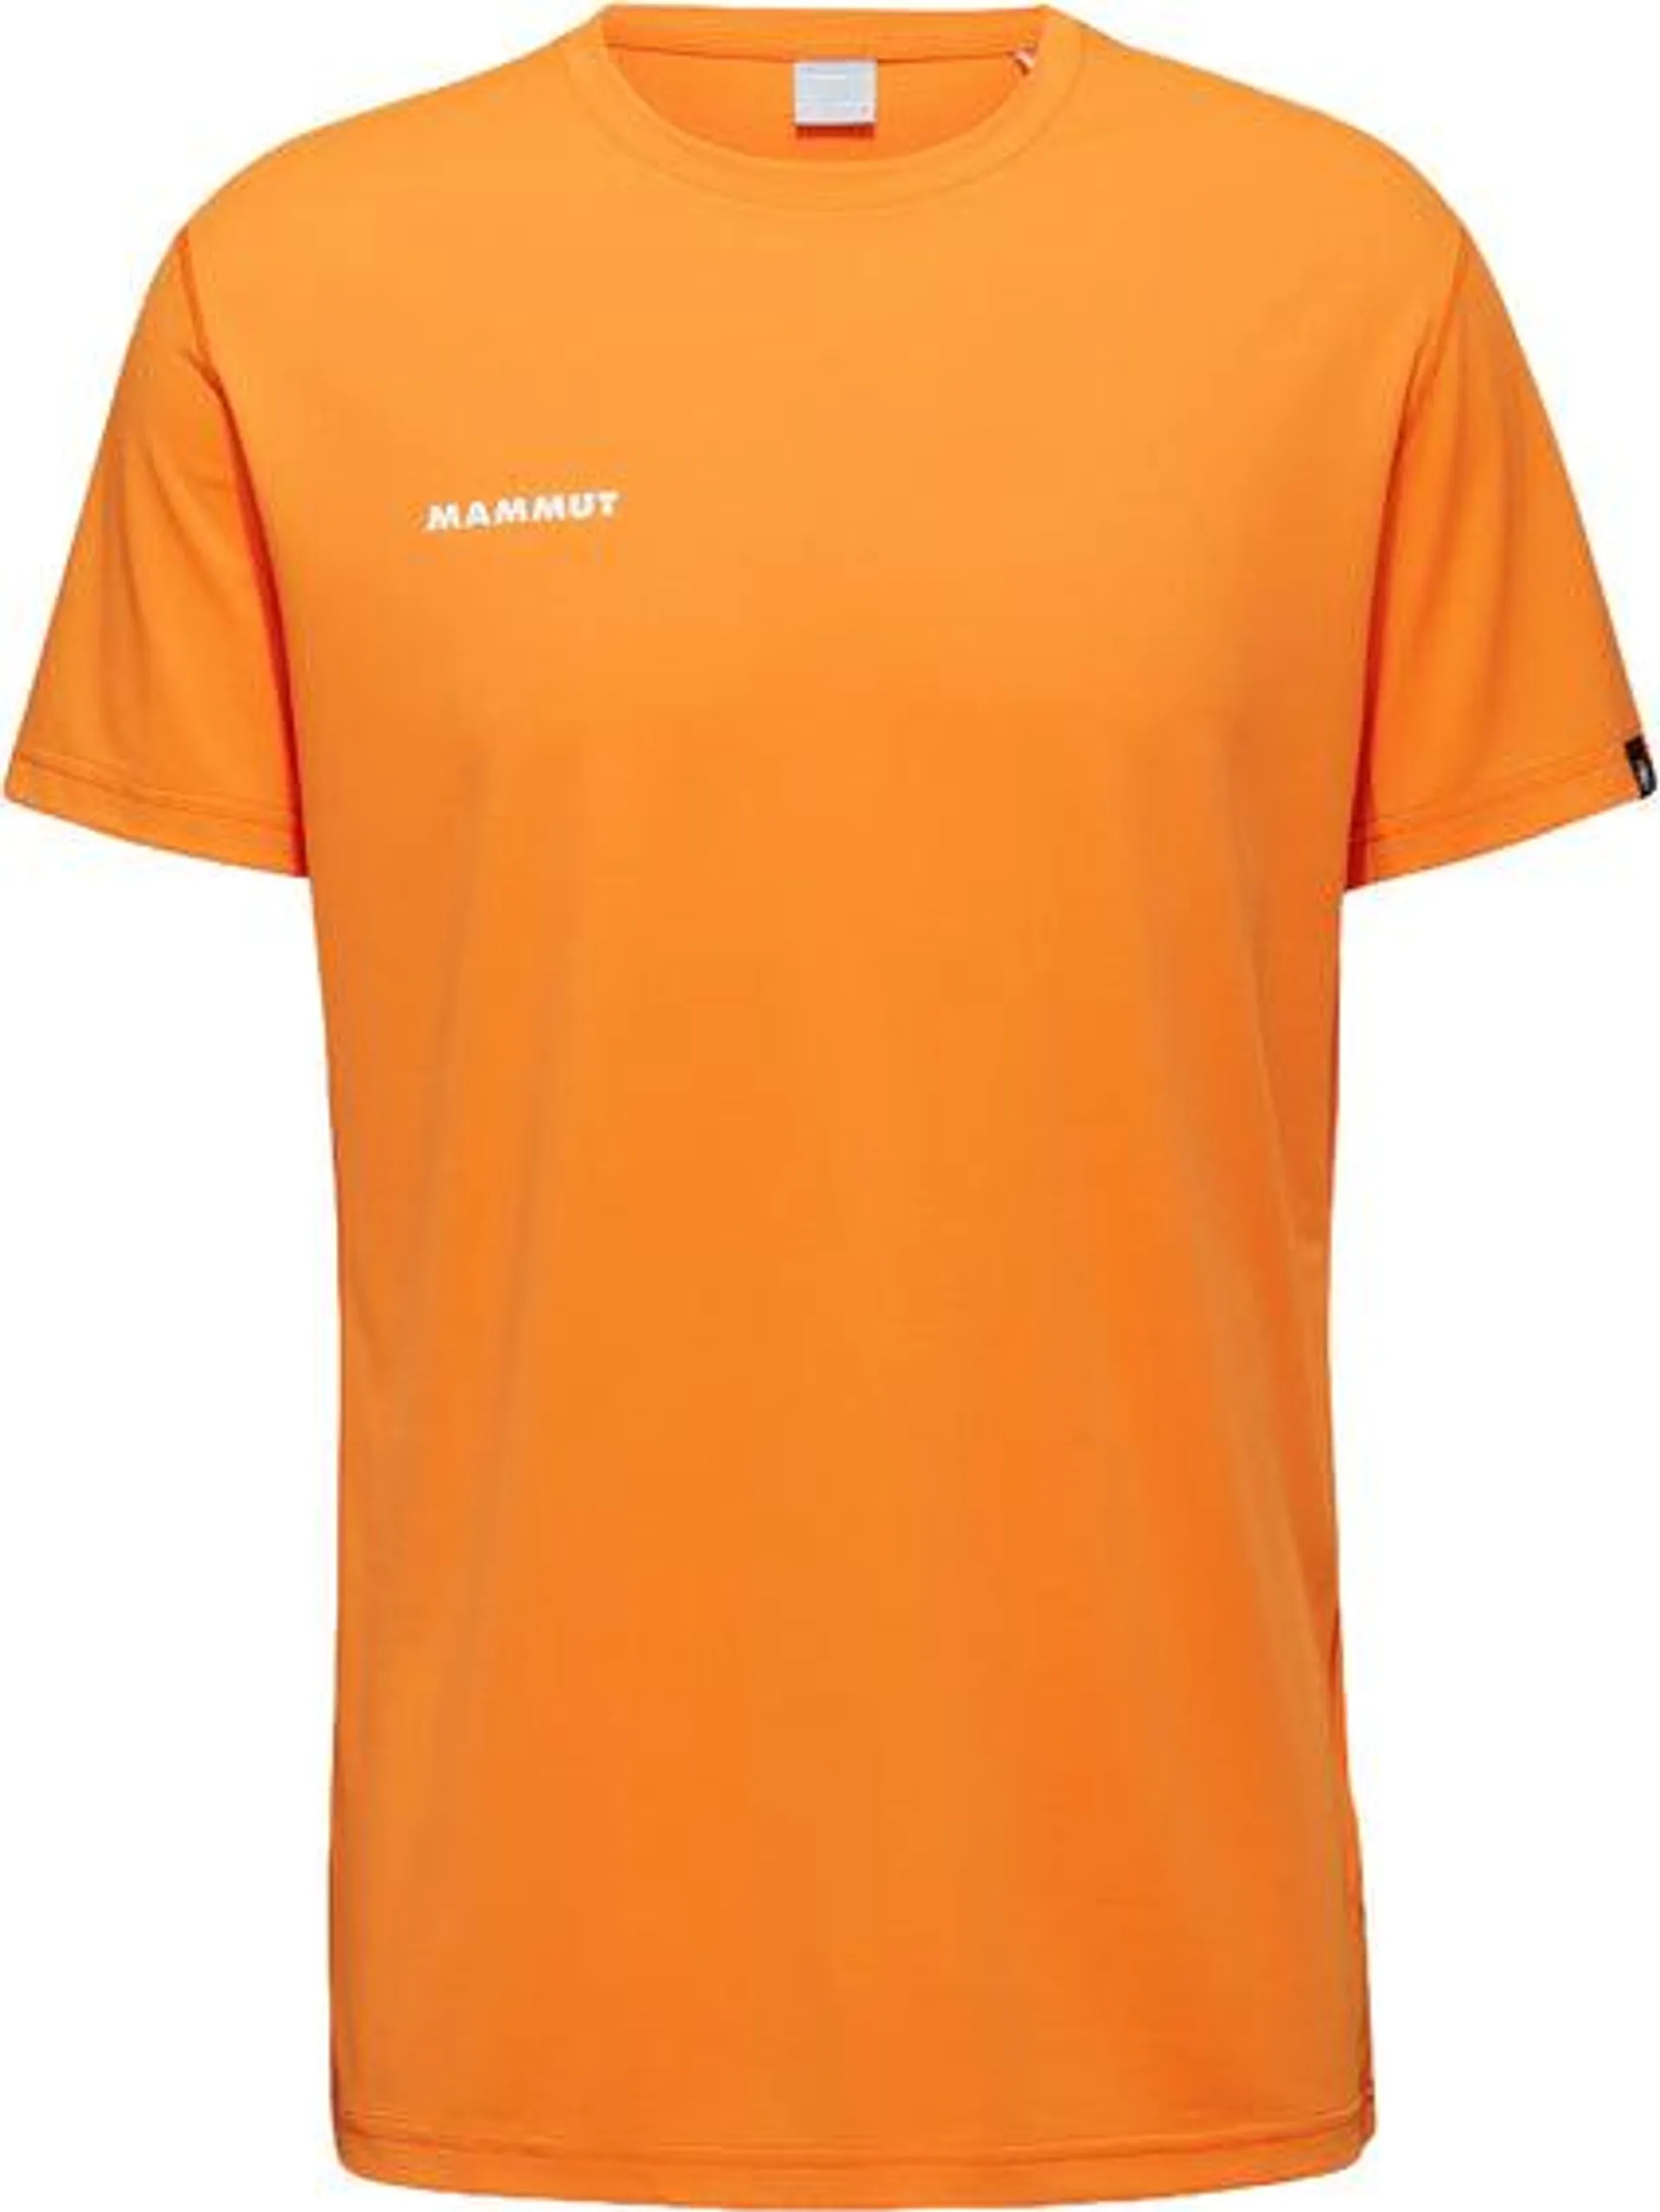 Massone Sport T-Shirt - Men's